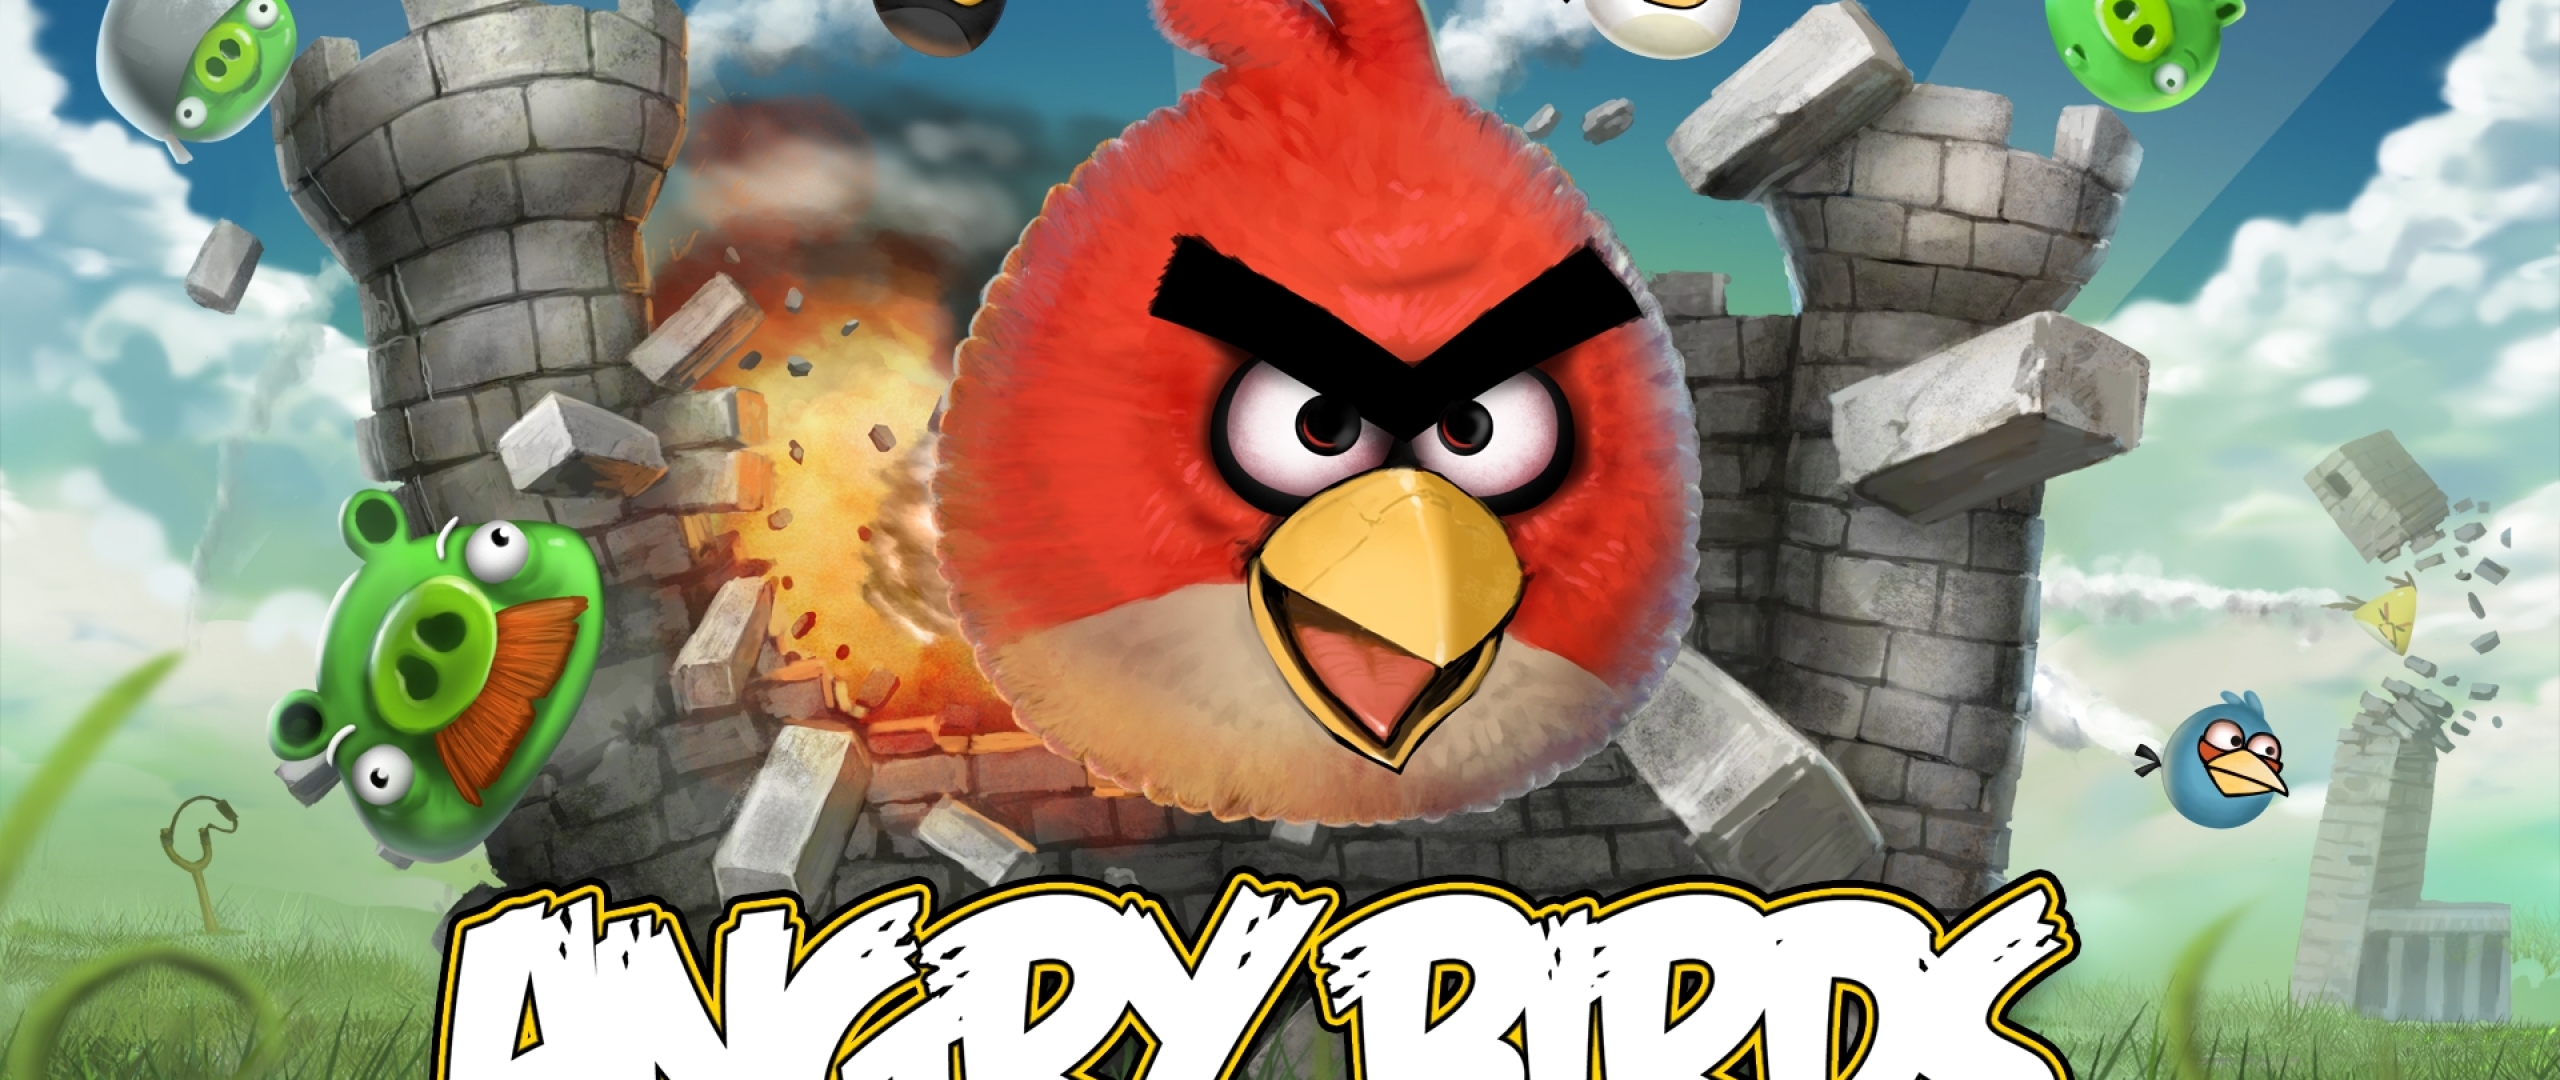 Игра Angry Birds Classic. Энгри бердз игра первая версия. Angry Birds китайская версия. Игра Энгри бердз 2 злые птицы.